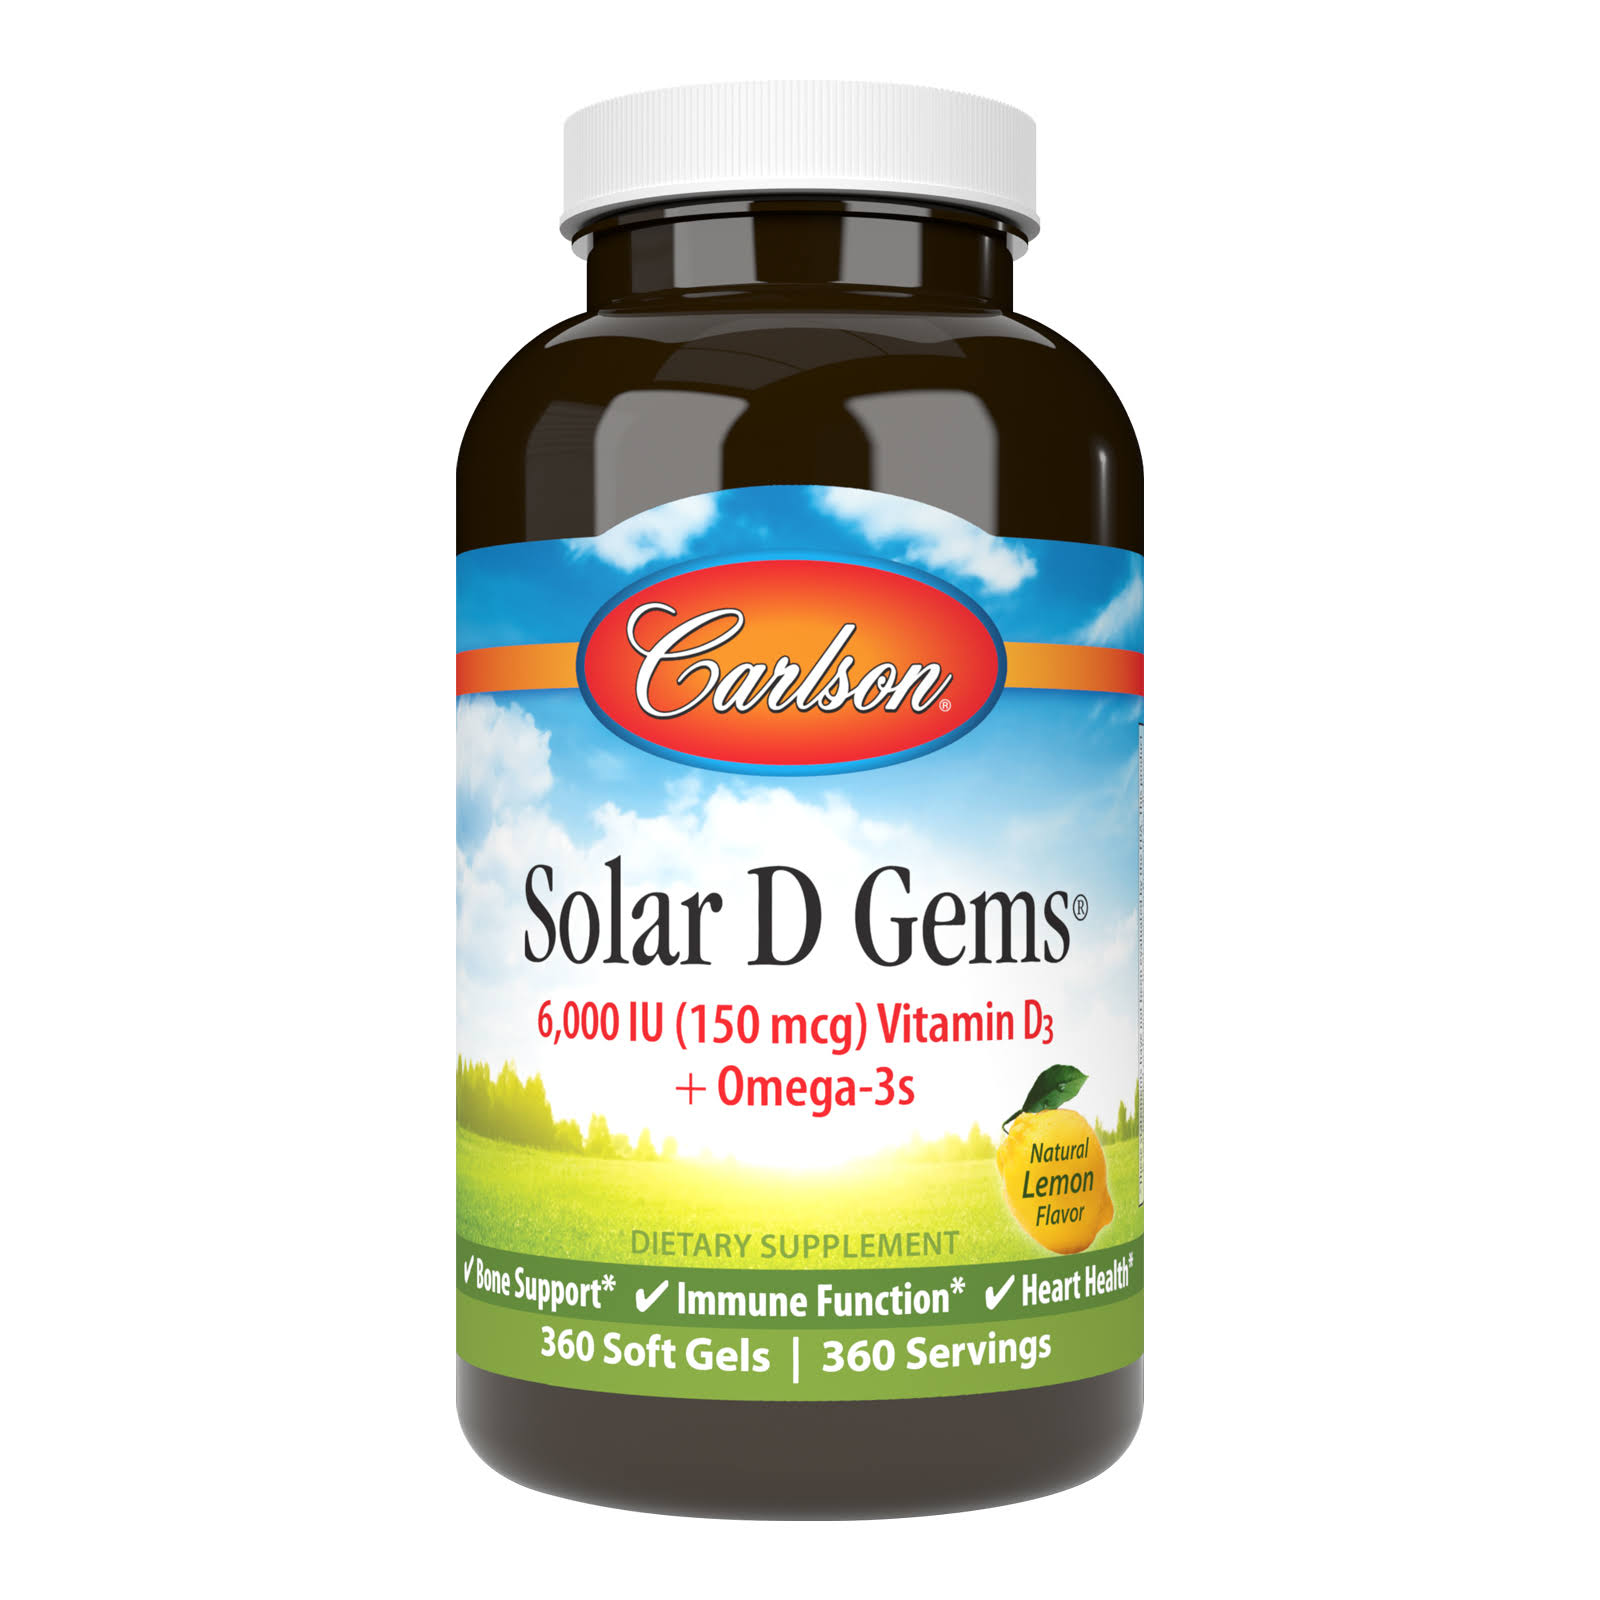 Carlson - Solar D Gems 6000 IU (150 mcg) Vitamin D3, 115 MG Omega-3 EPA and DHA, Vitamin D Fish Oil Capsule, Lemon, 360 Softgels